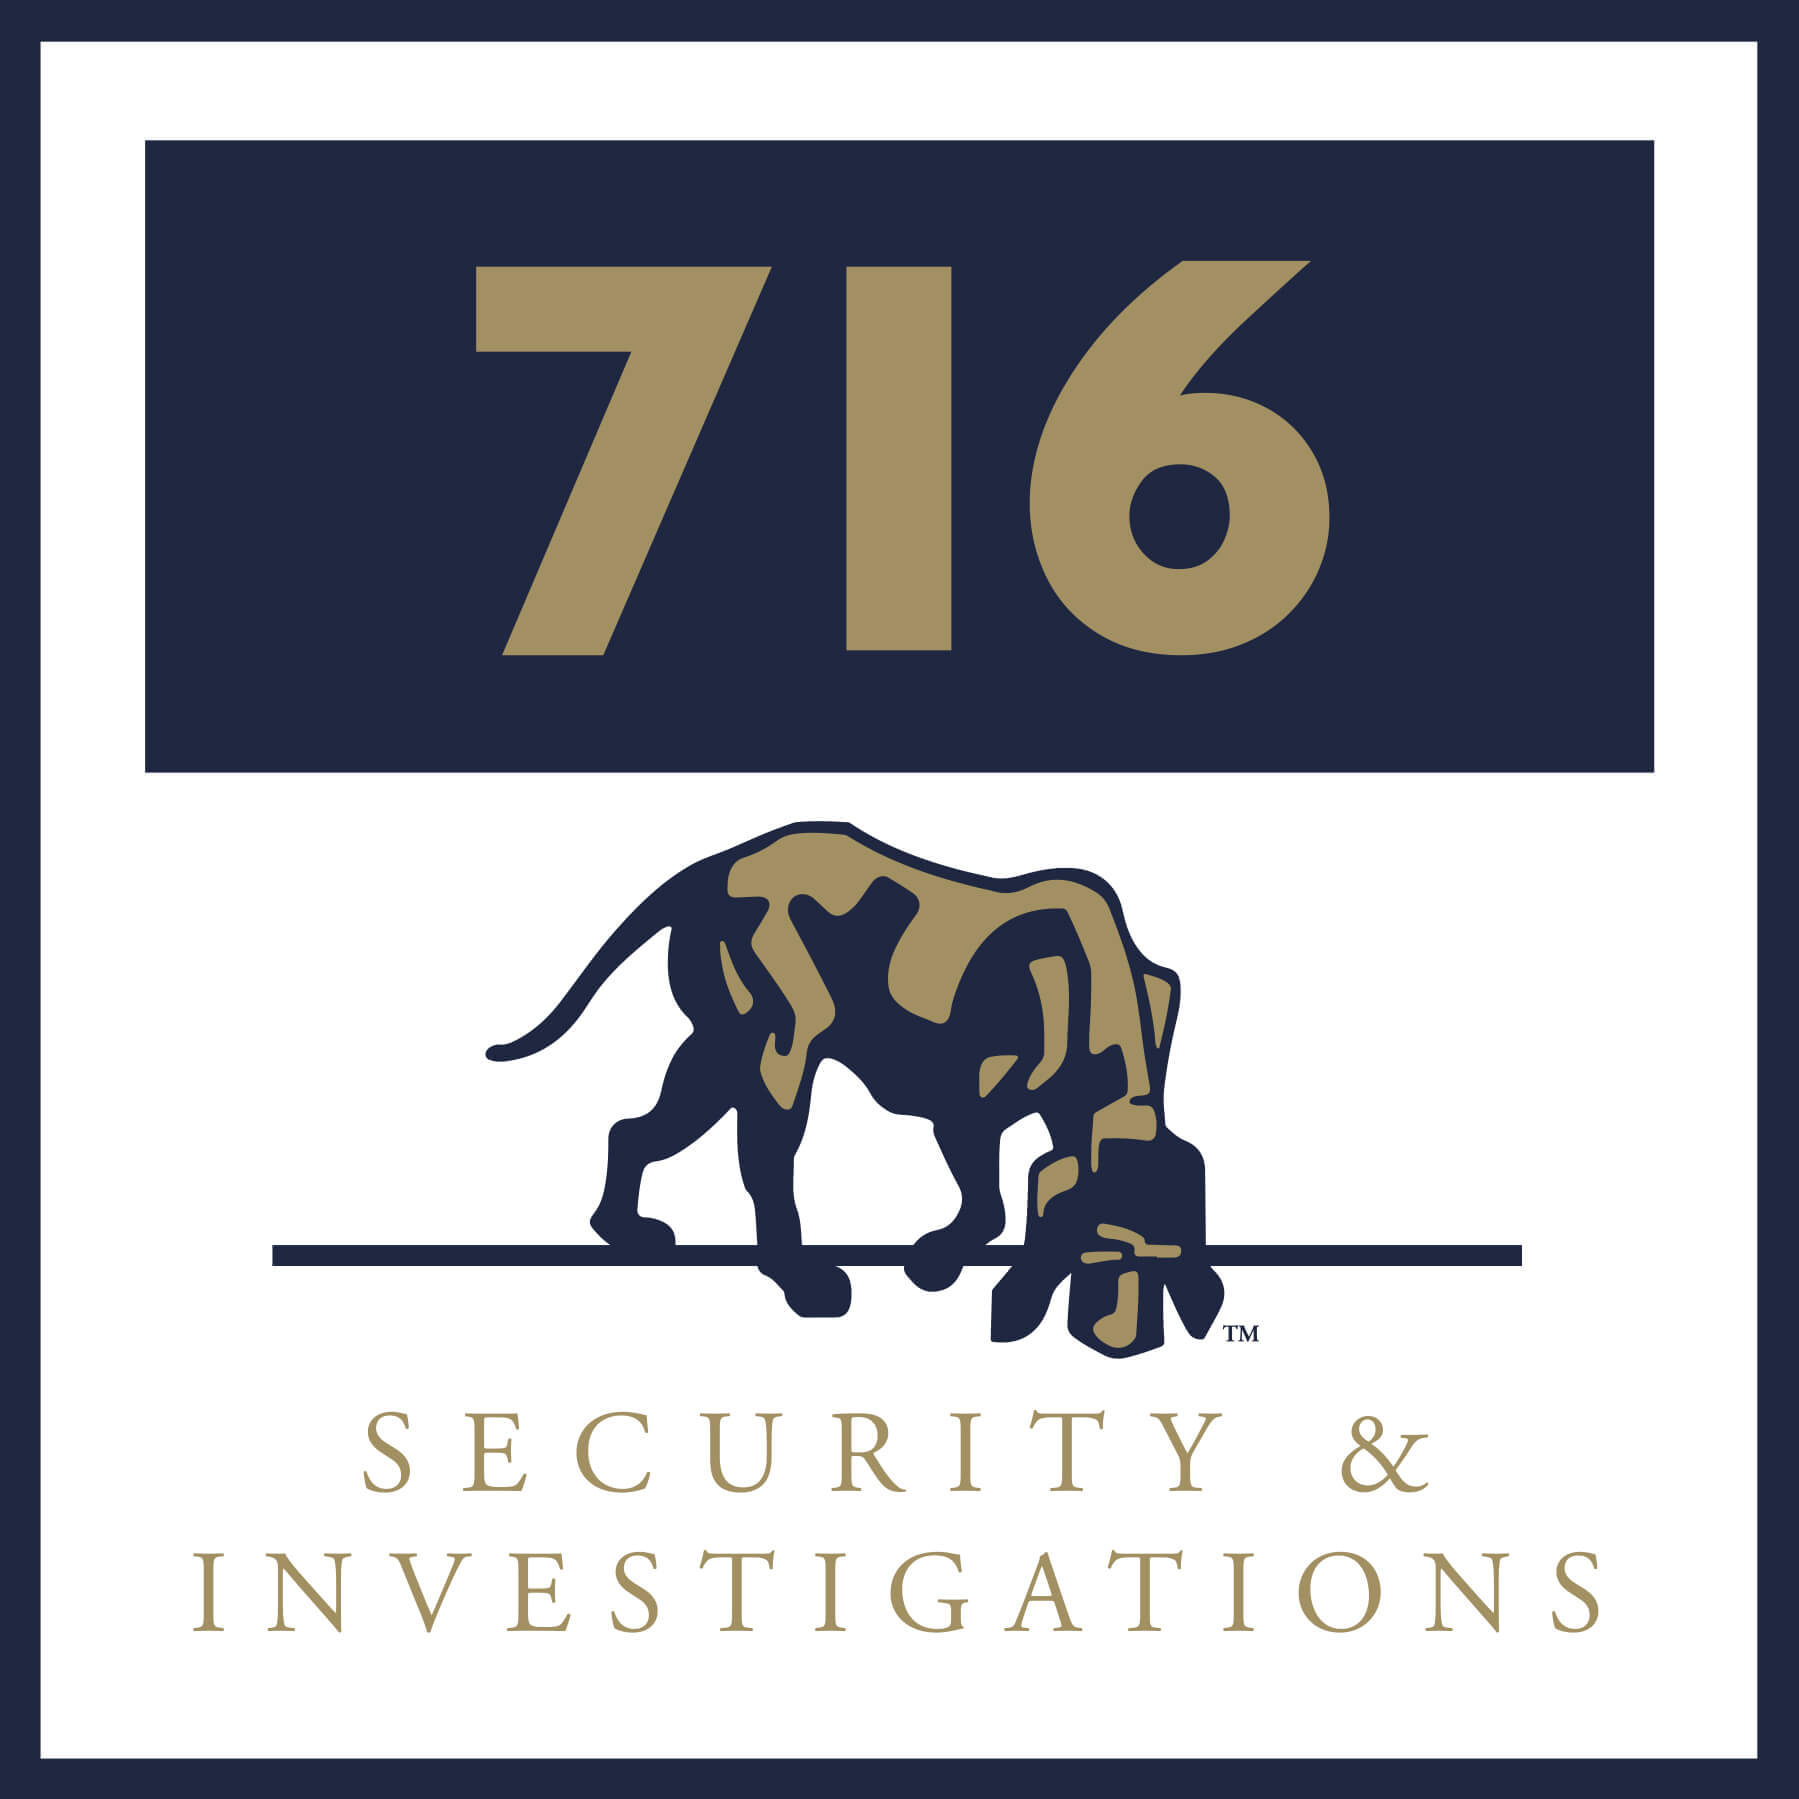 716 Security & Investigation